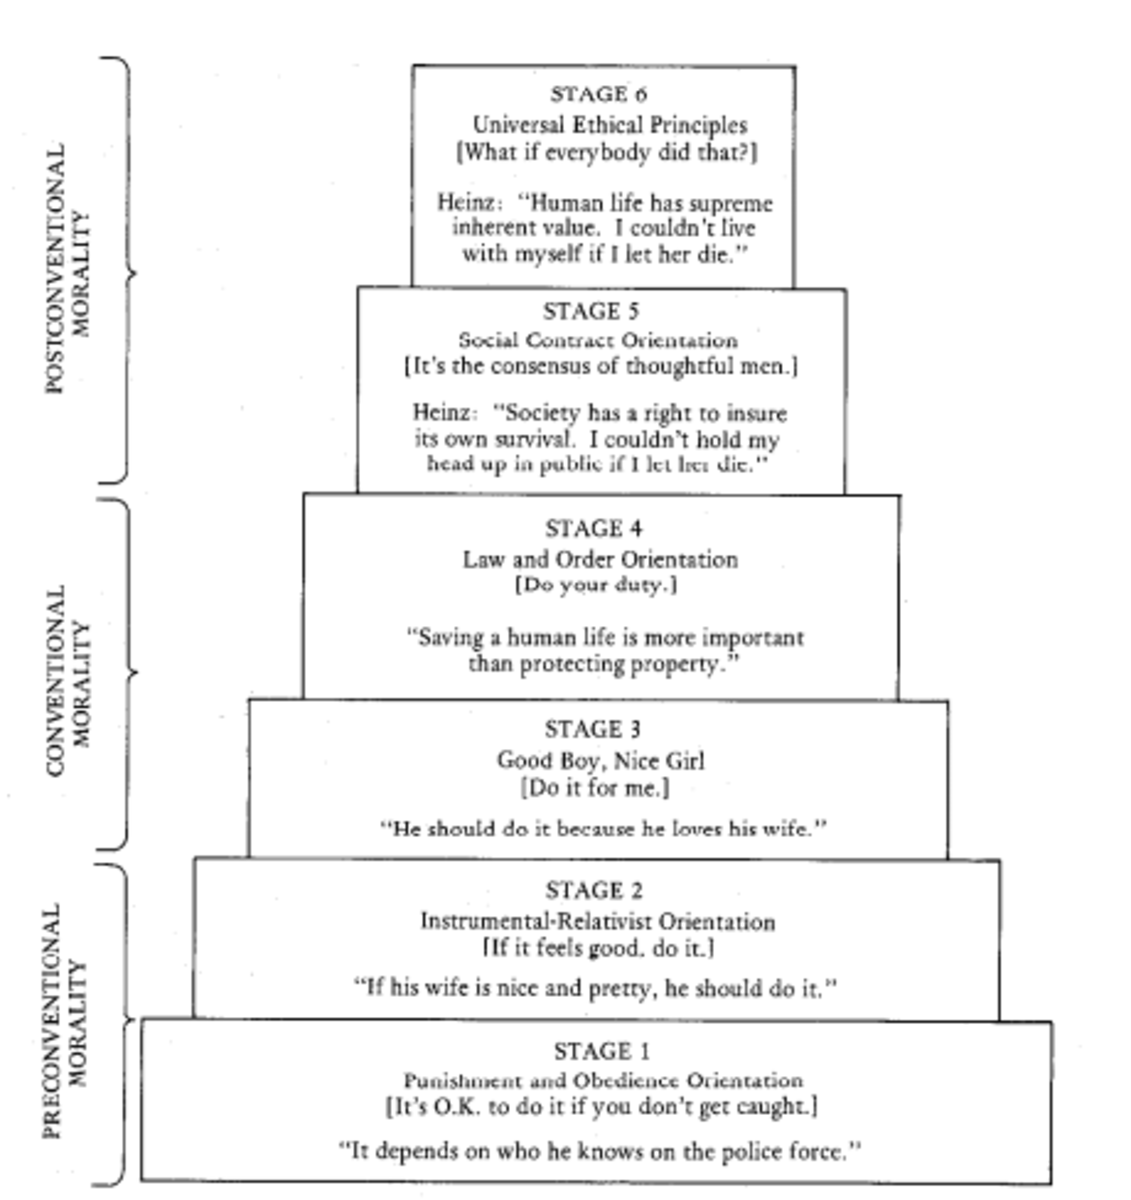 Diagram illustrating Lawrence Kohlberg's stages of moral development, including pre-conventional, conventional, and post-conventional levels of moral reasoning.